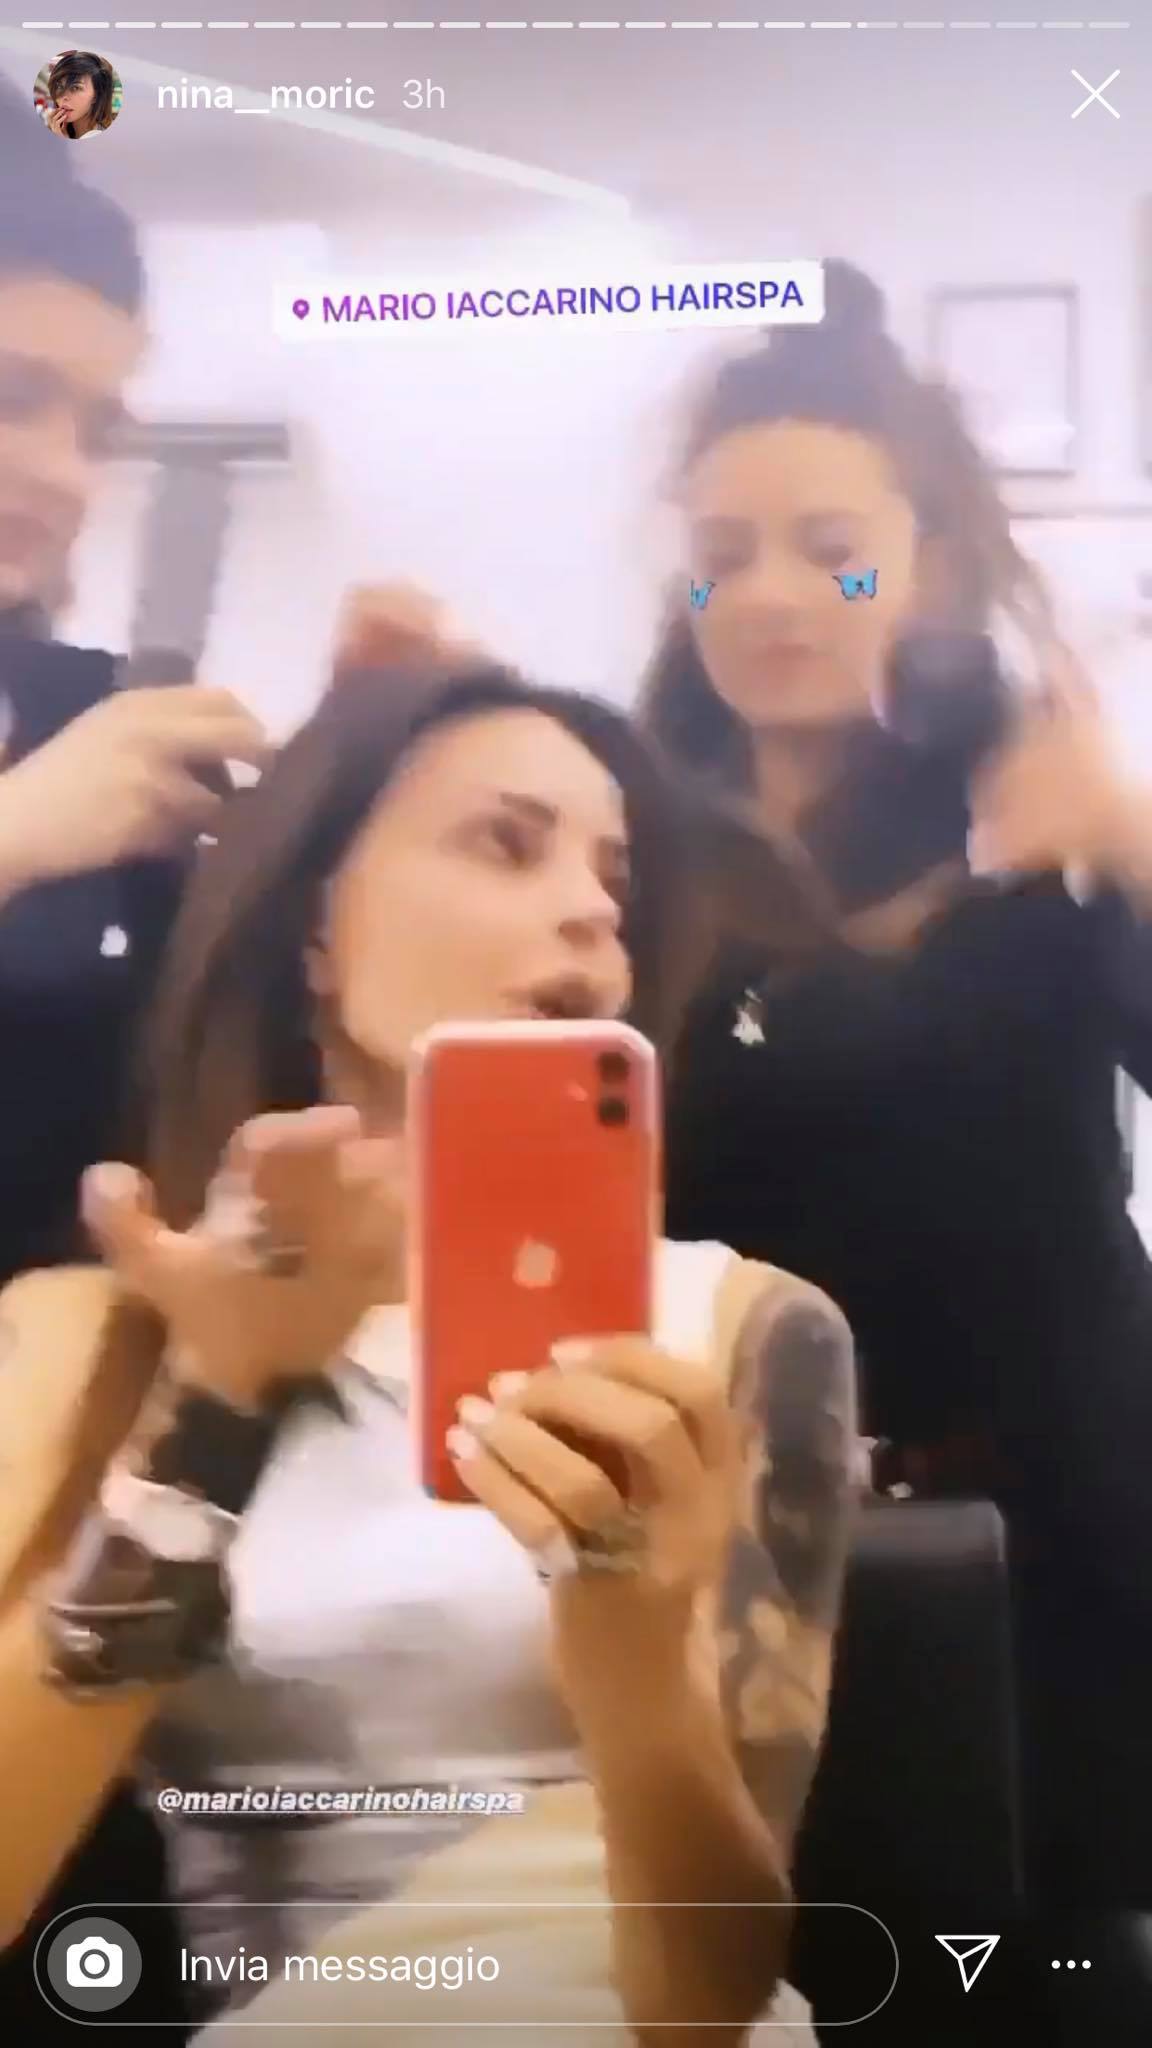 Nina Moric parrucchiere 